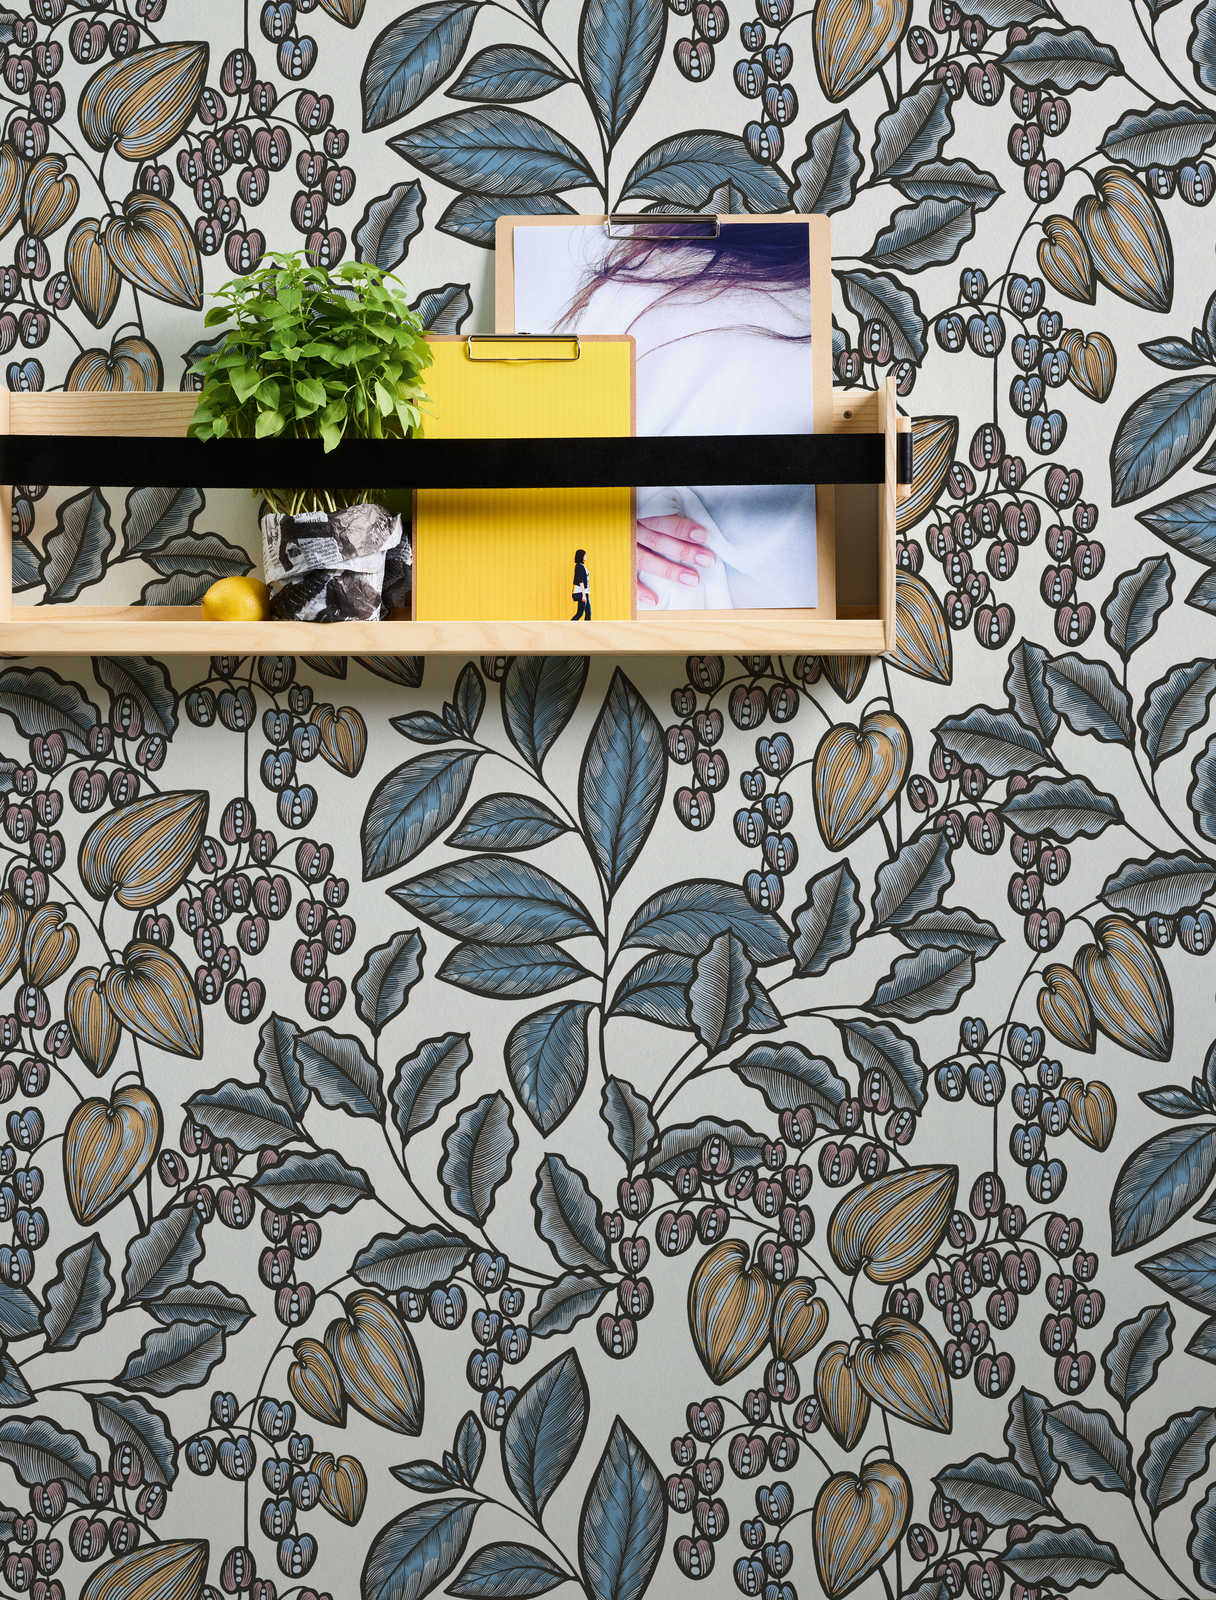             Modern wallpaper leaves pattern in retro look - blue, white, yellow
        